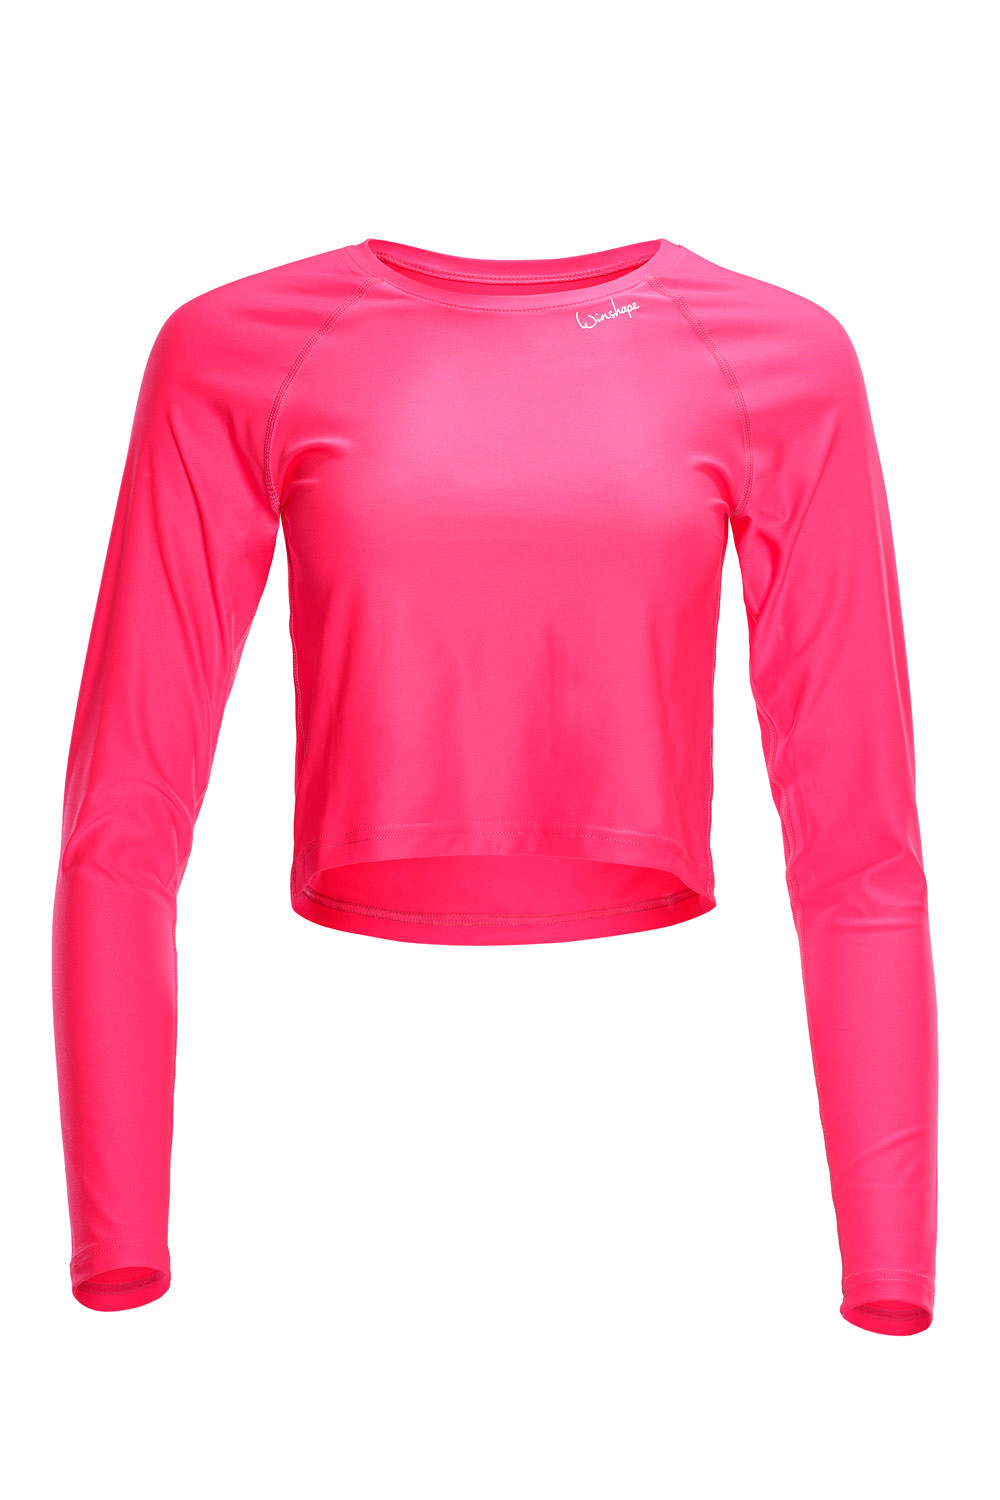 Top Sleeve pink, Style Light AET116, Long neon Slim Functional Winshape Cropped